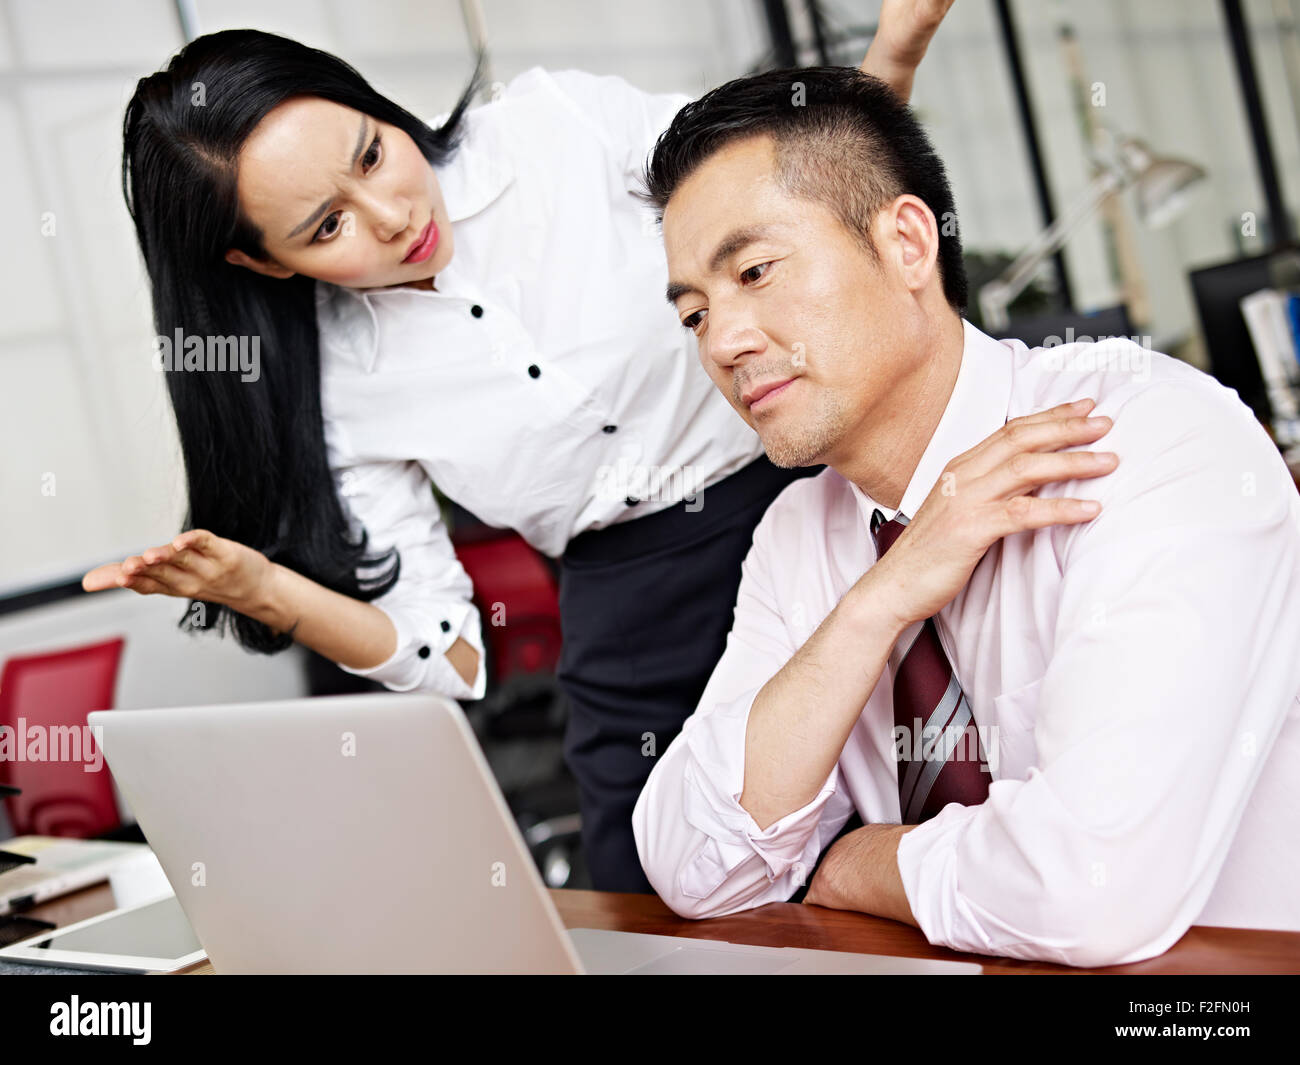 asian businesswoman reacting to male colleague's behavior Stock Photo